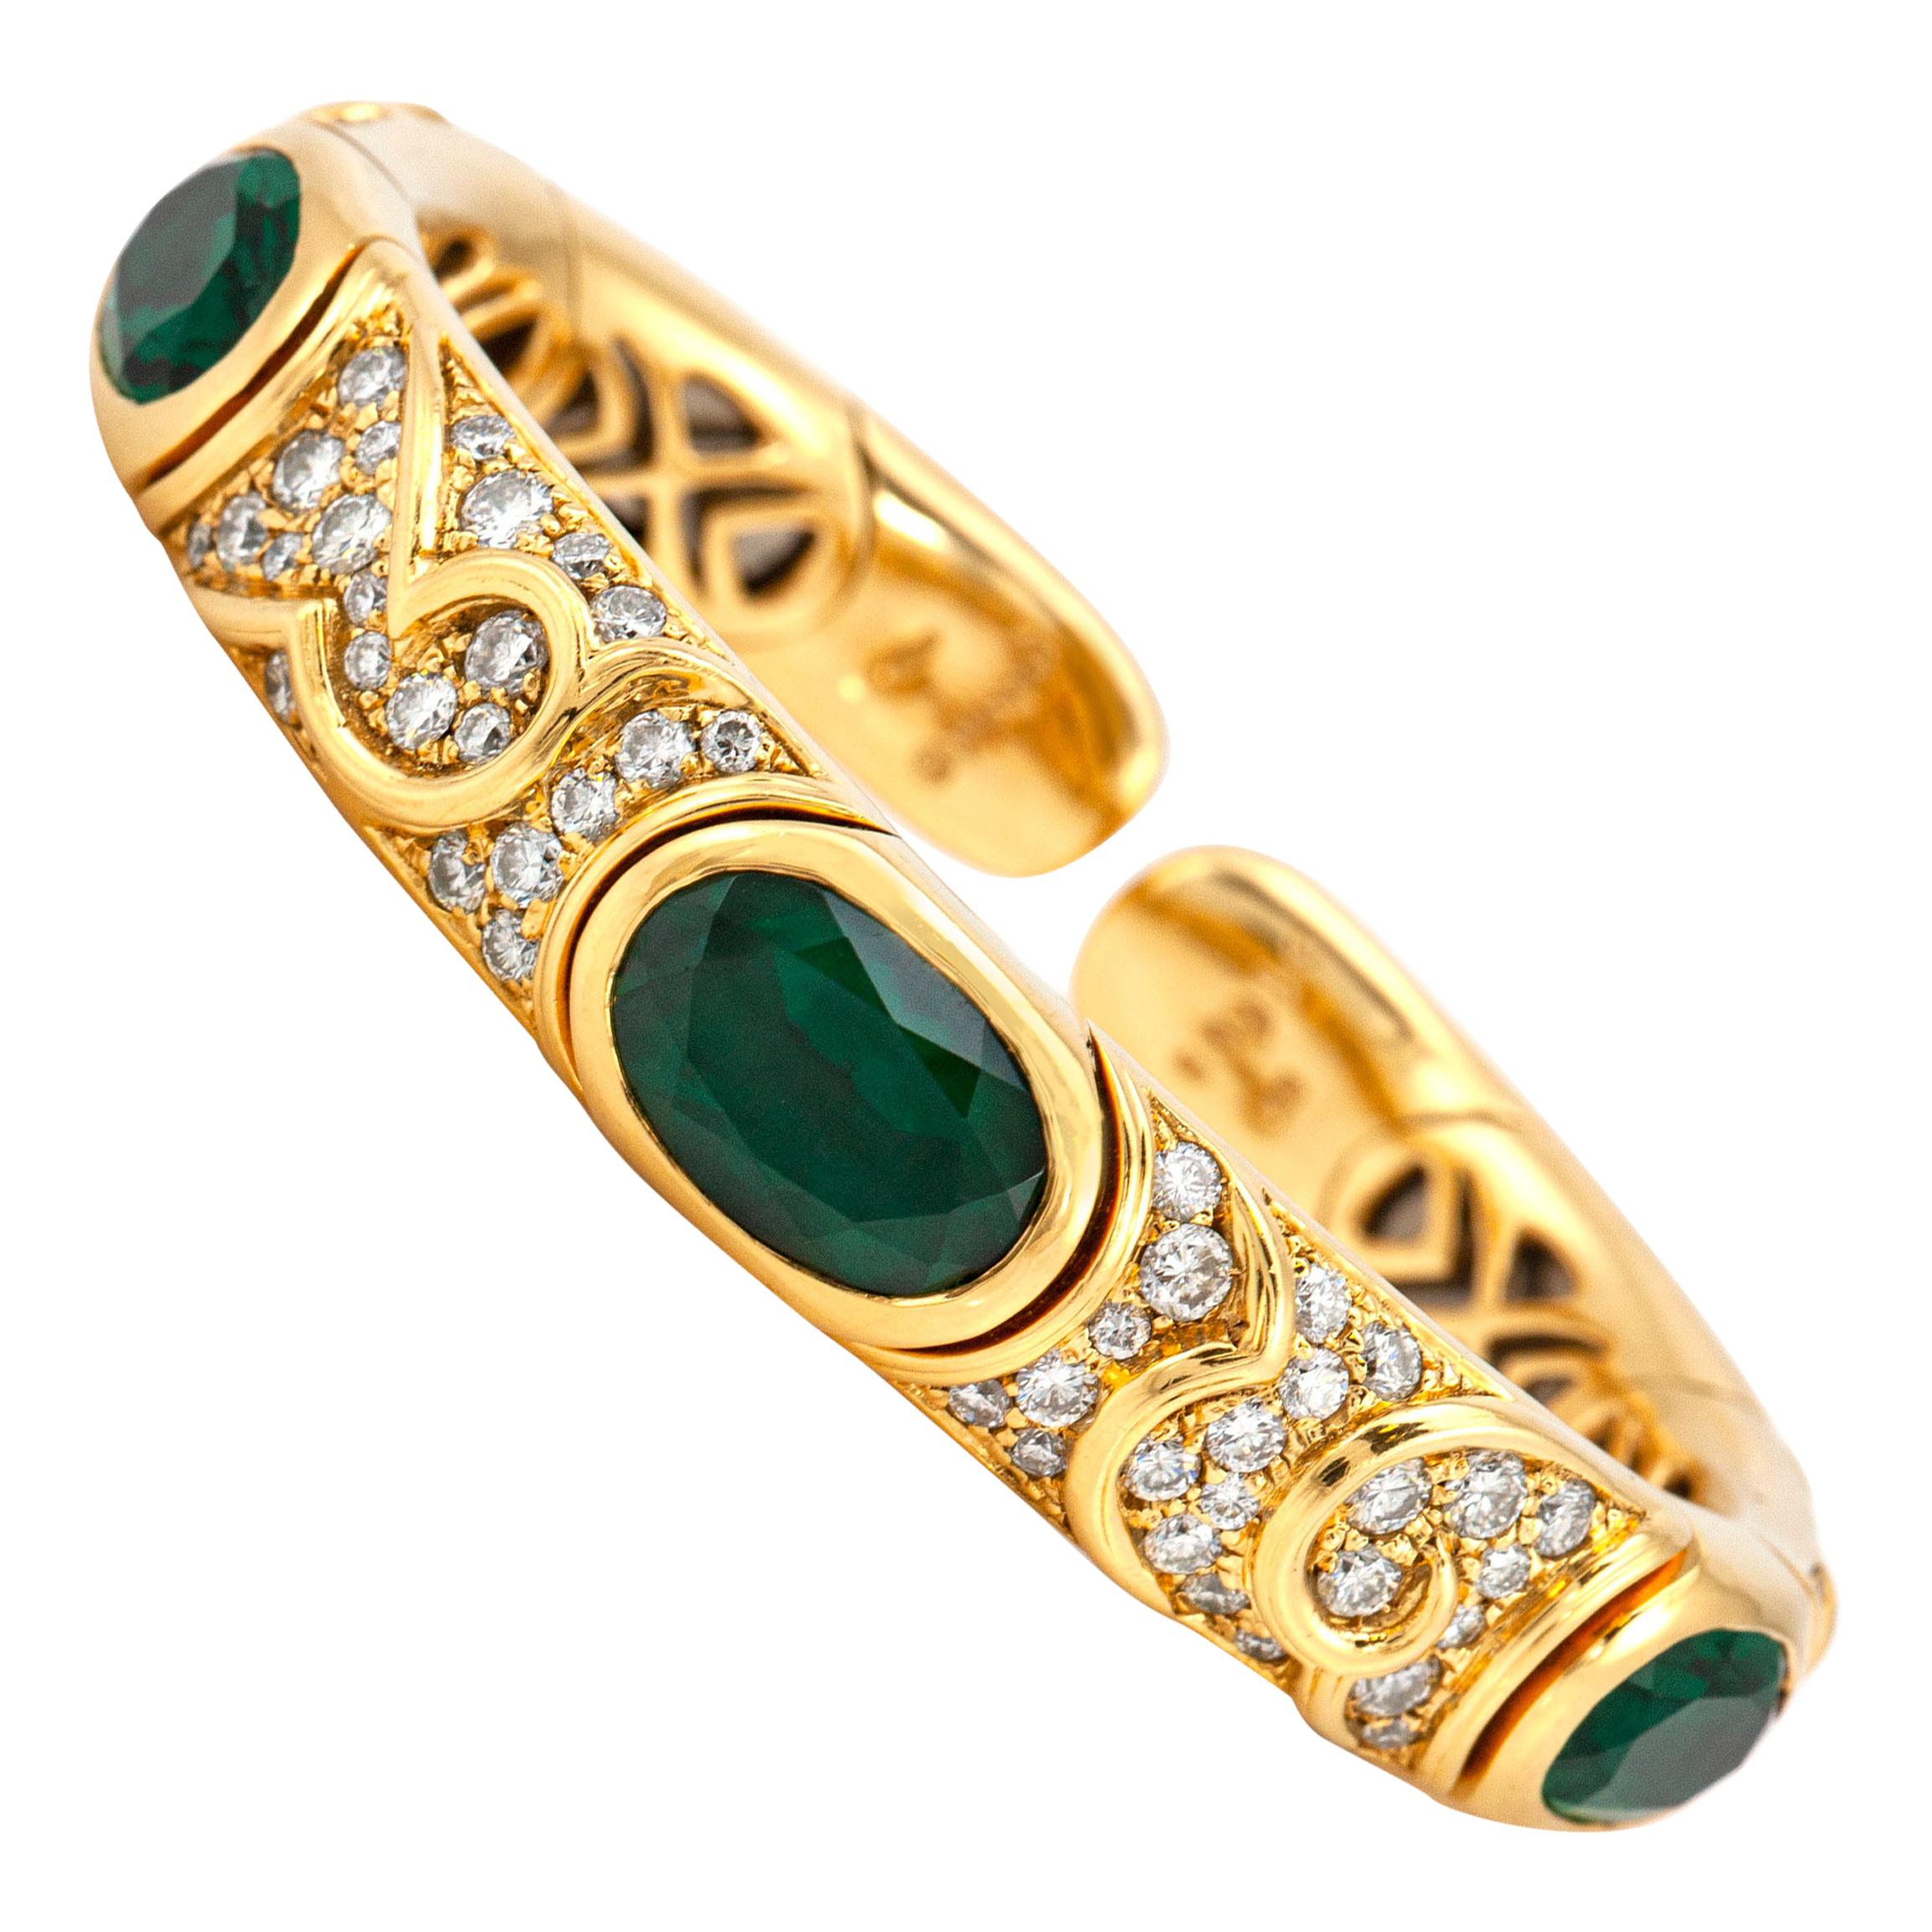 Marina B Gold Cuff Bracelet with Green Tourmaline and Diamonds